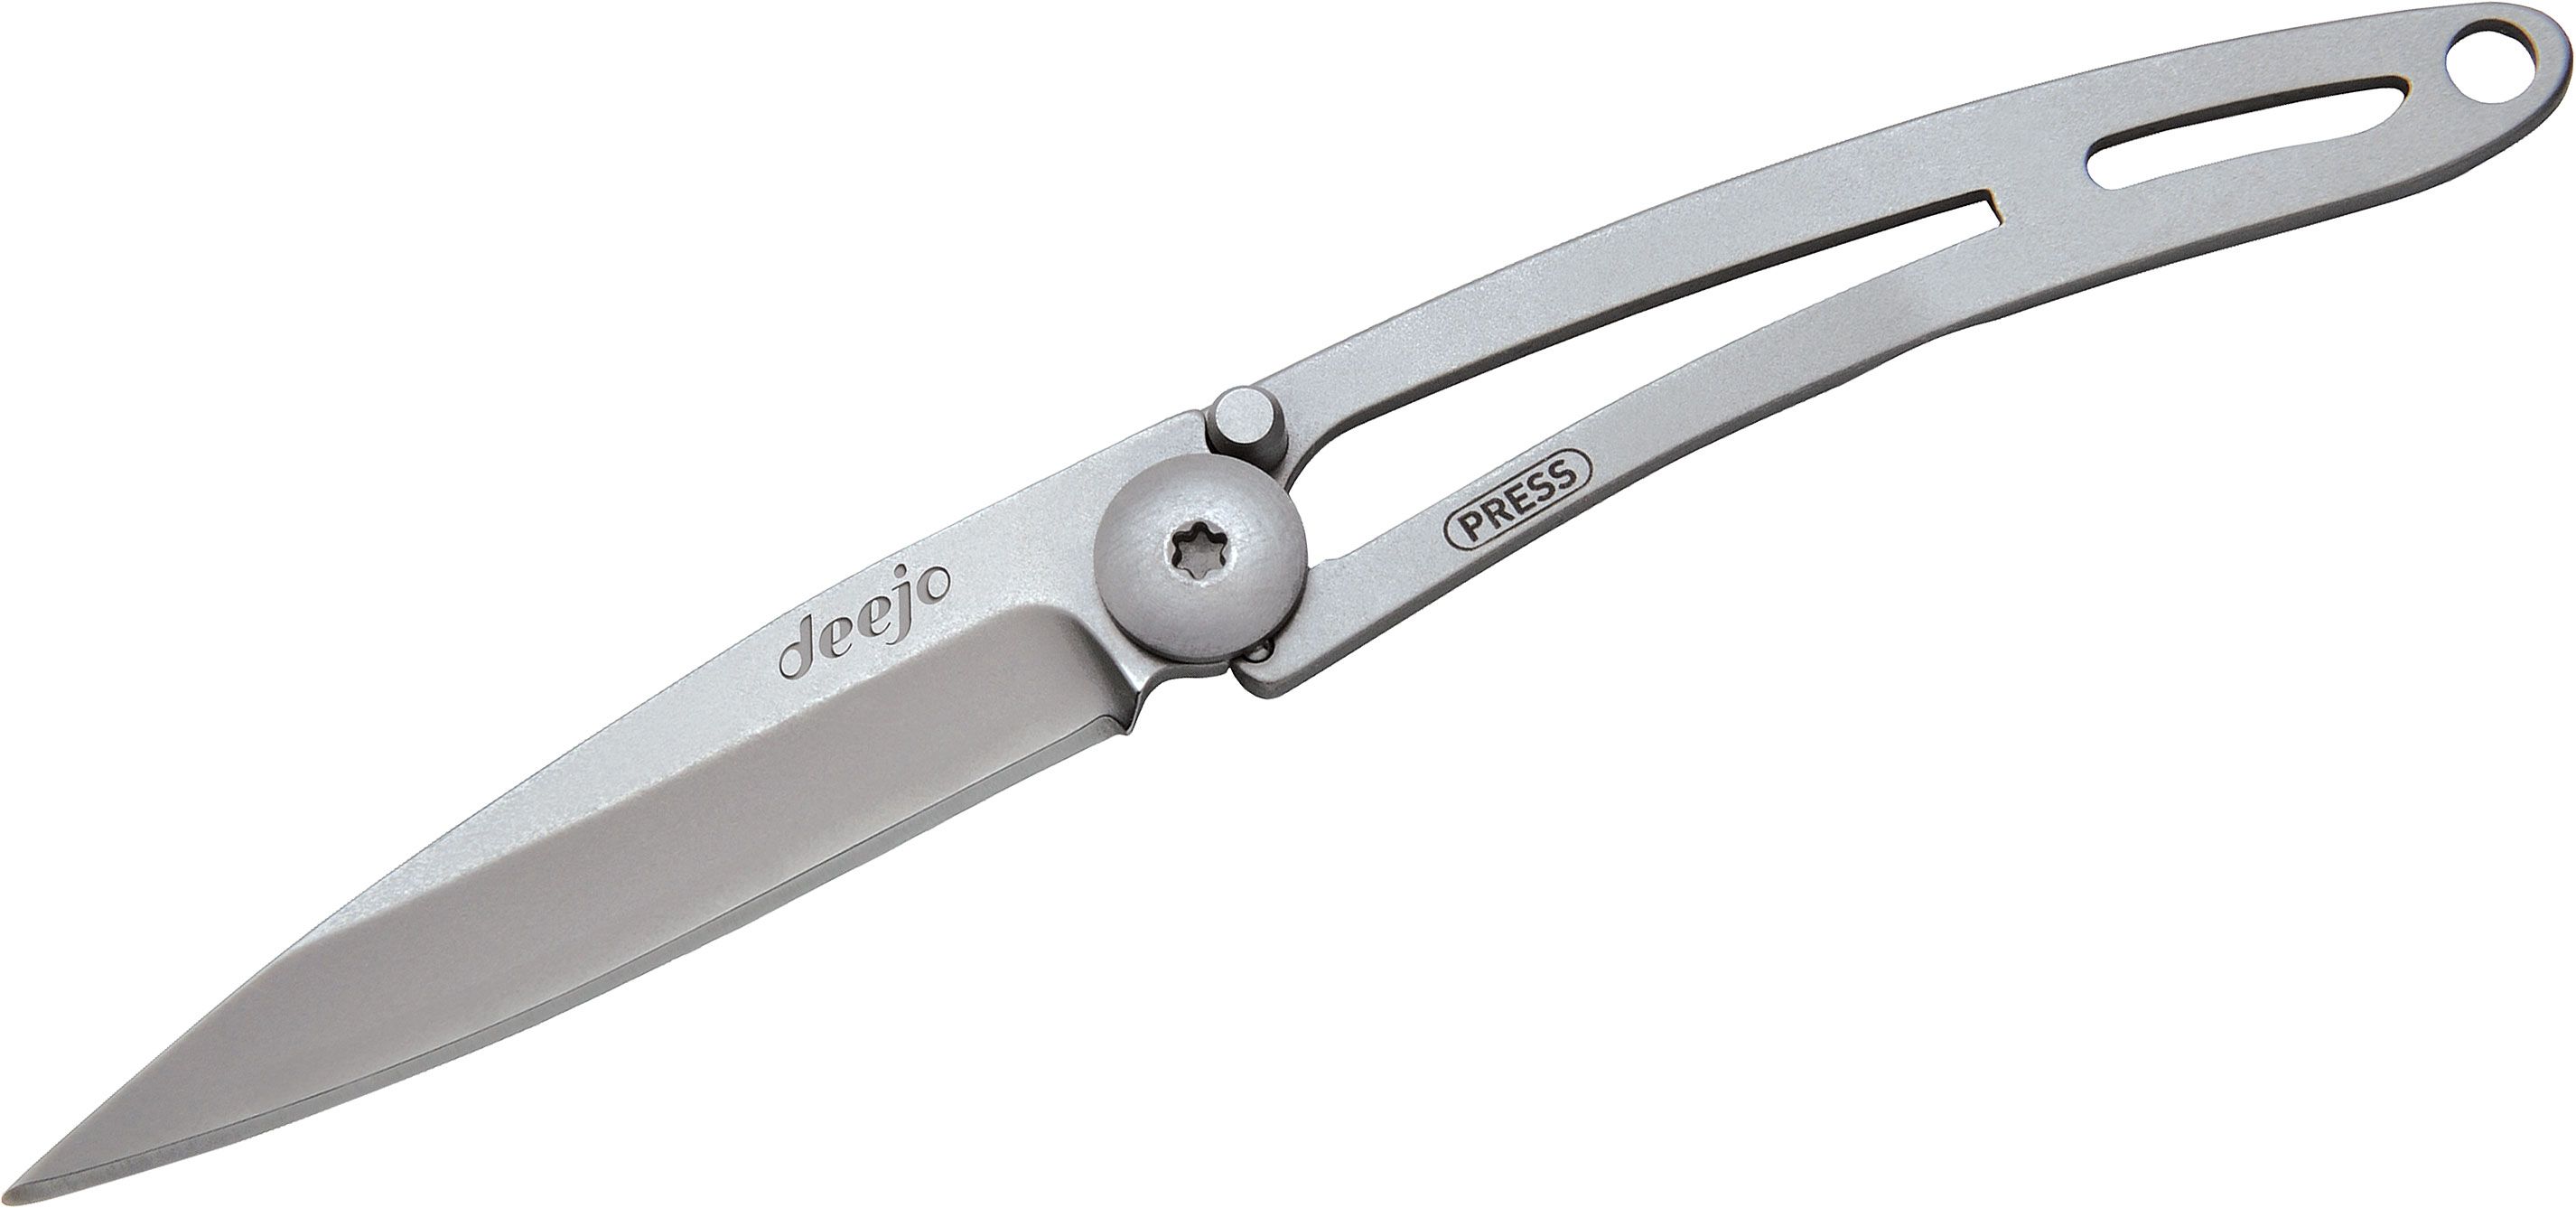 Deejo Knives Naked 15g Folding 2.25" Satin Plain Blade, Minimalist Design - KnifeCenter - 7CN000 - Discontinued